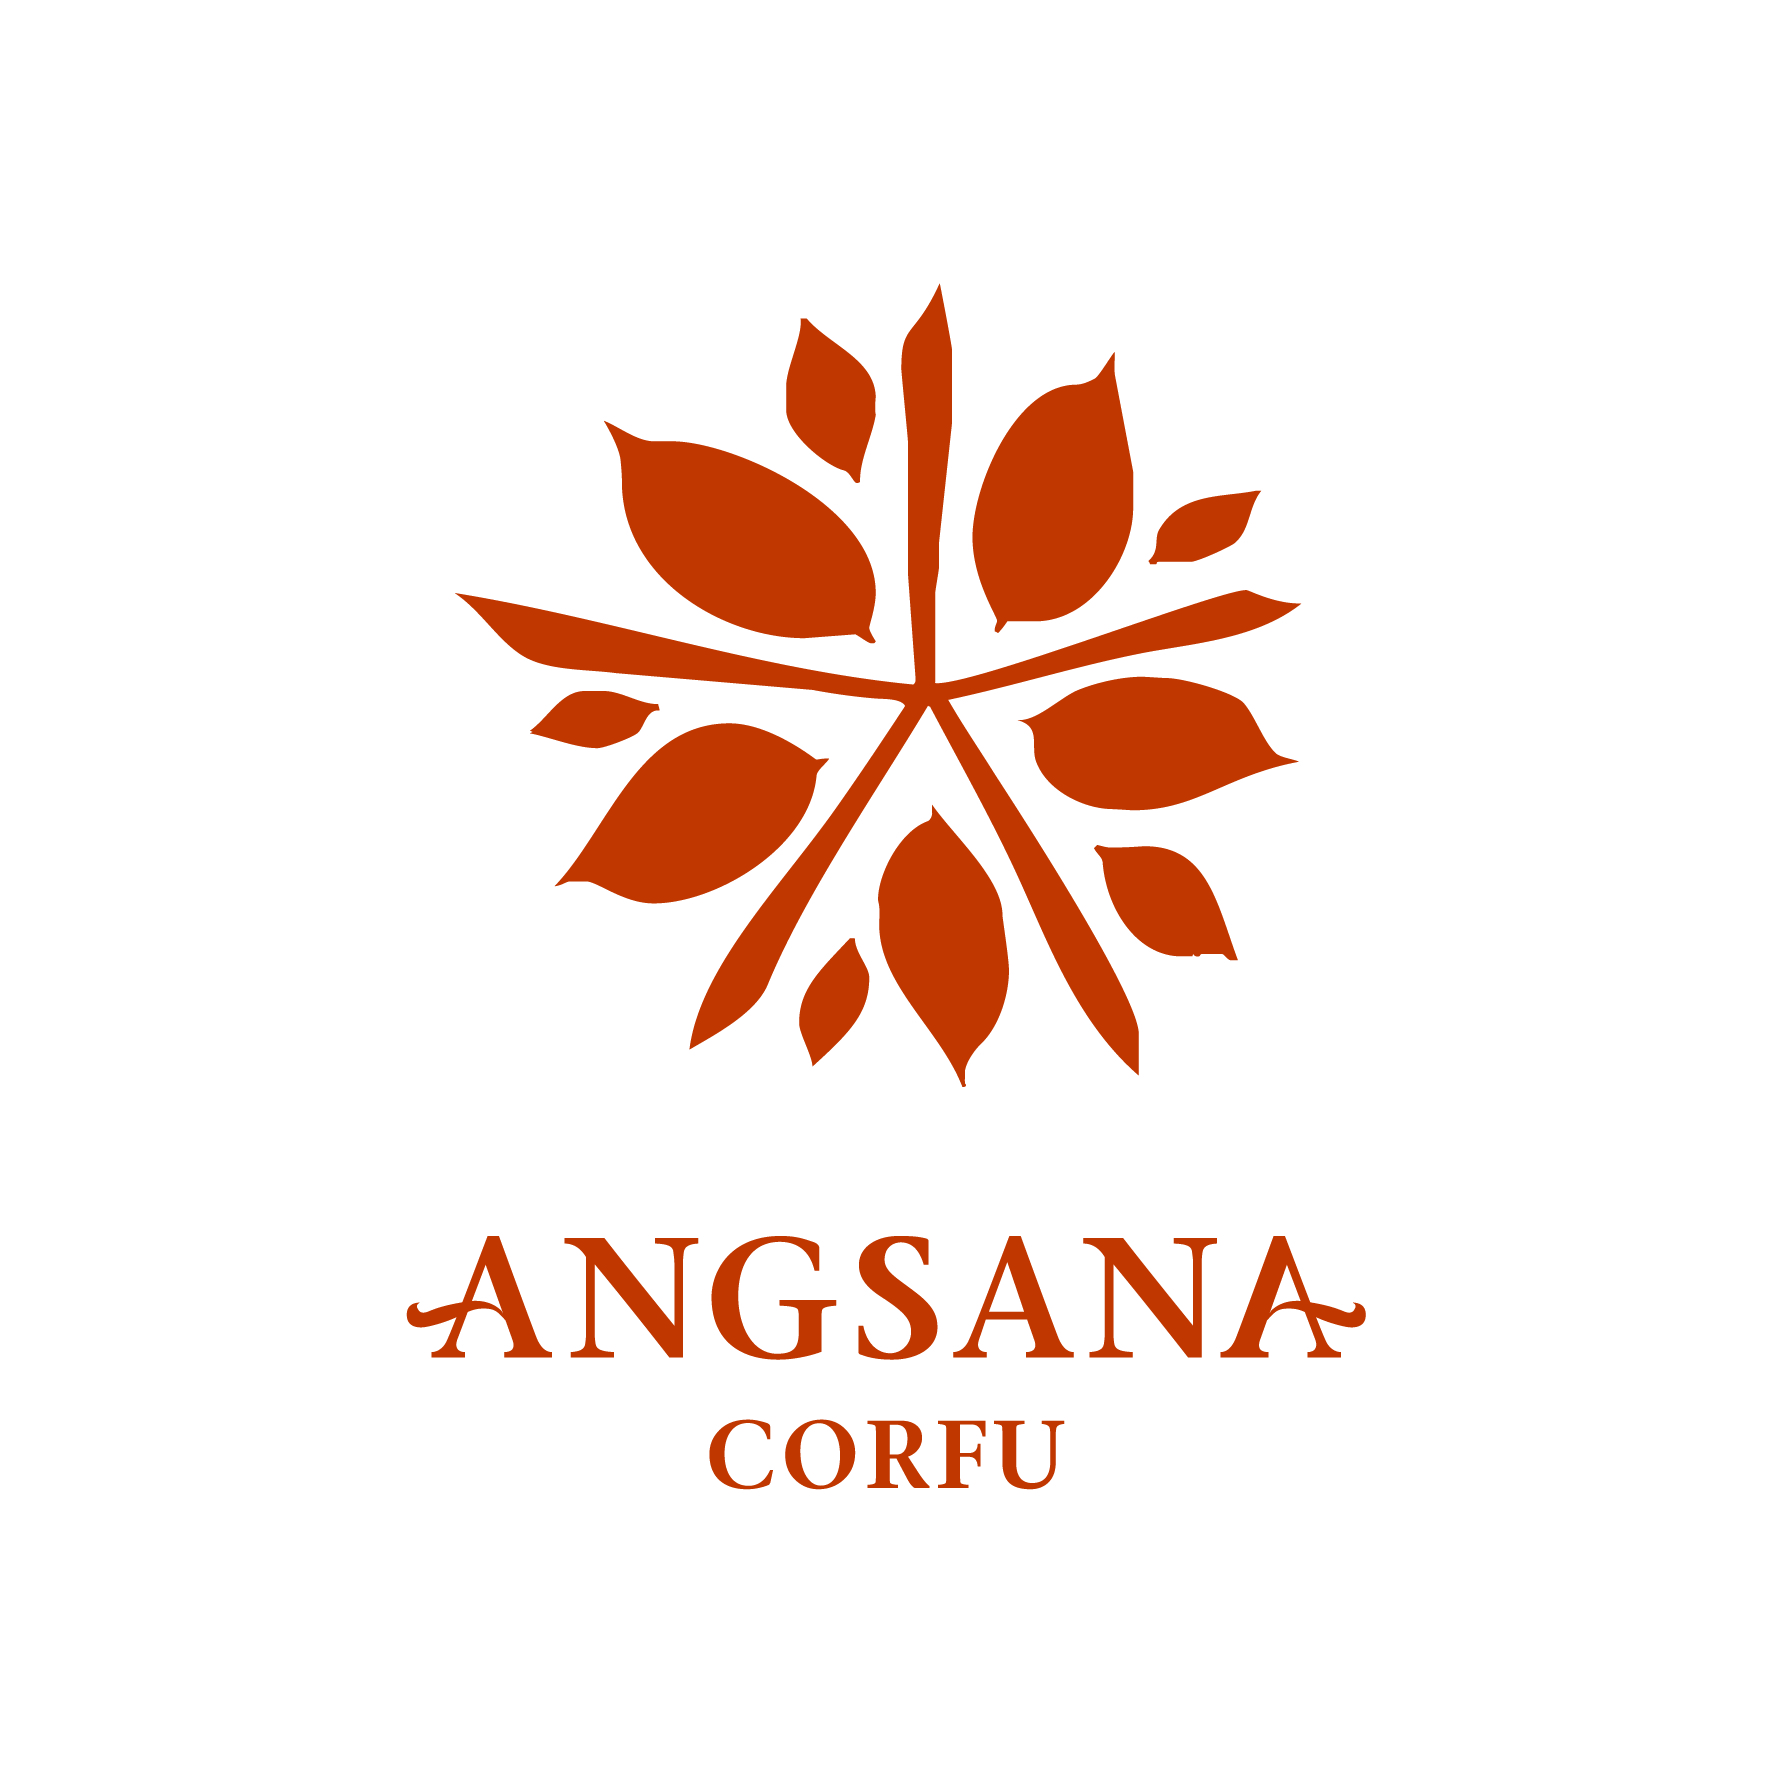 Angsana Corfu to Launch its New Villa Concept, Eclectic Living